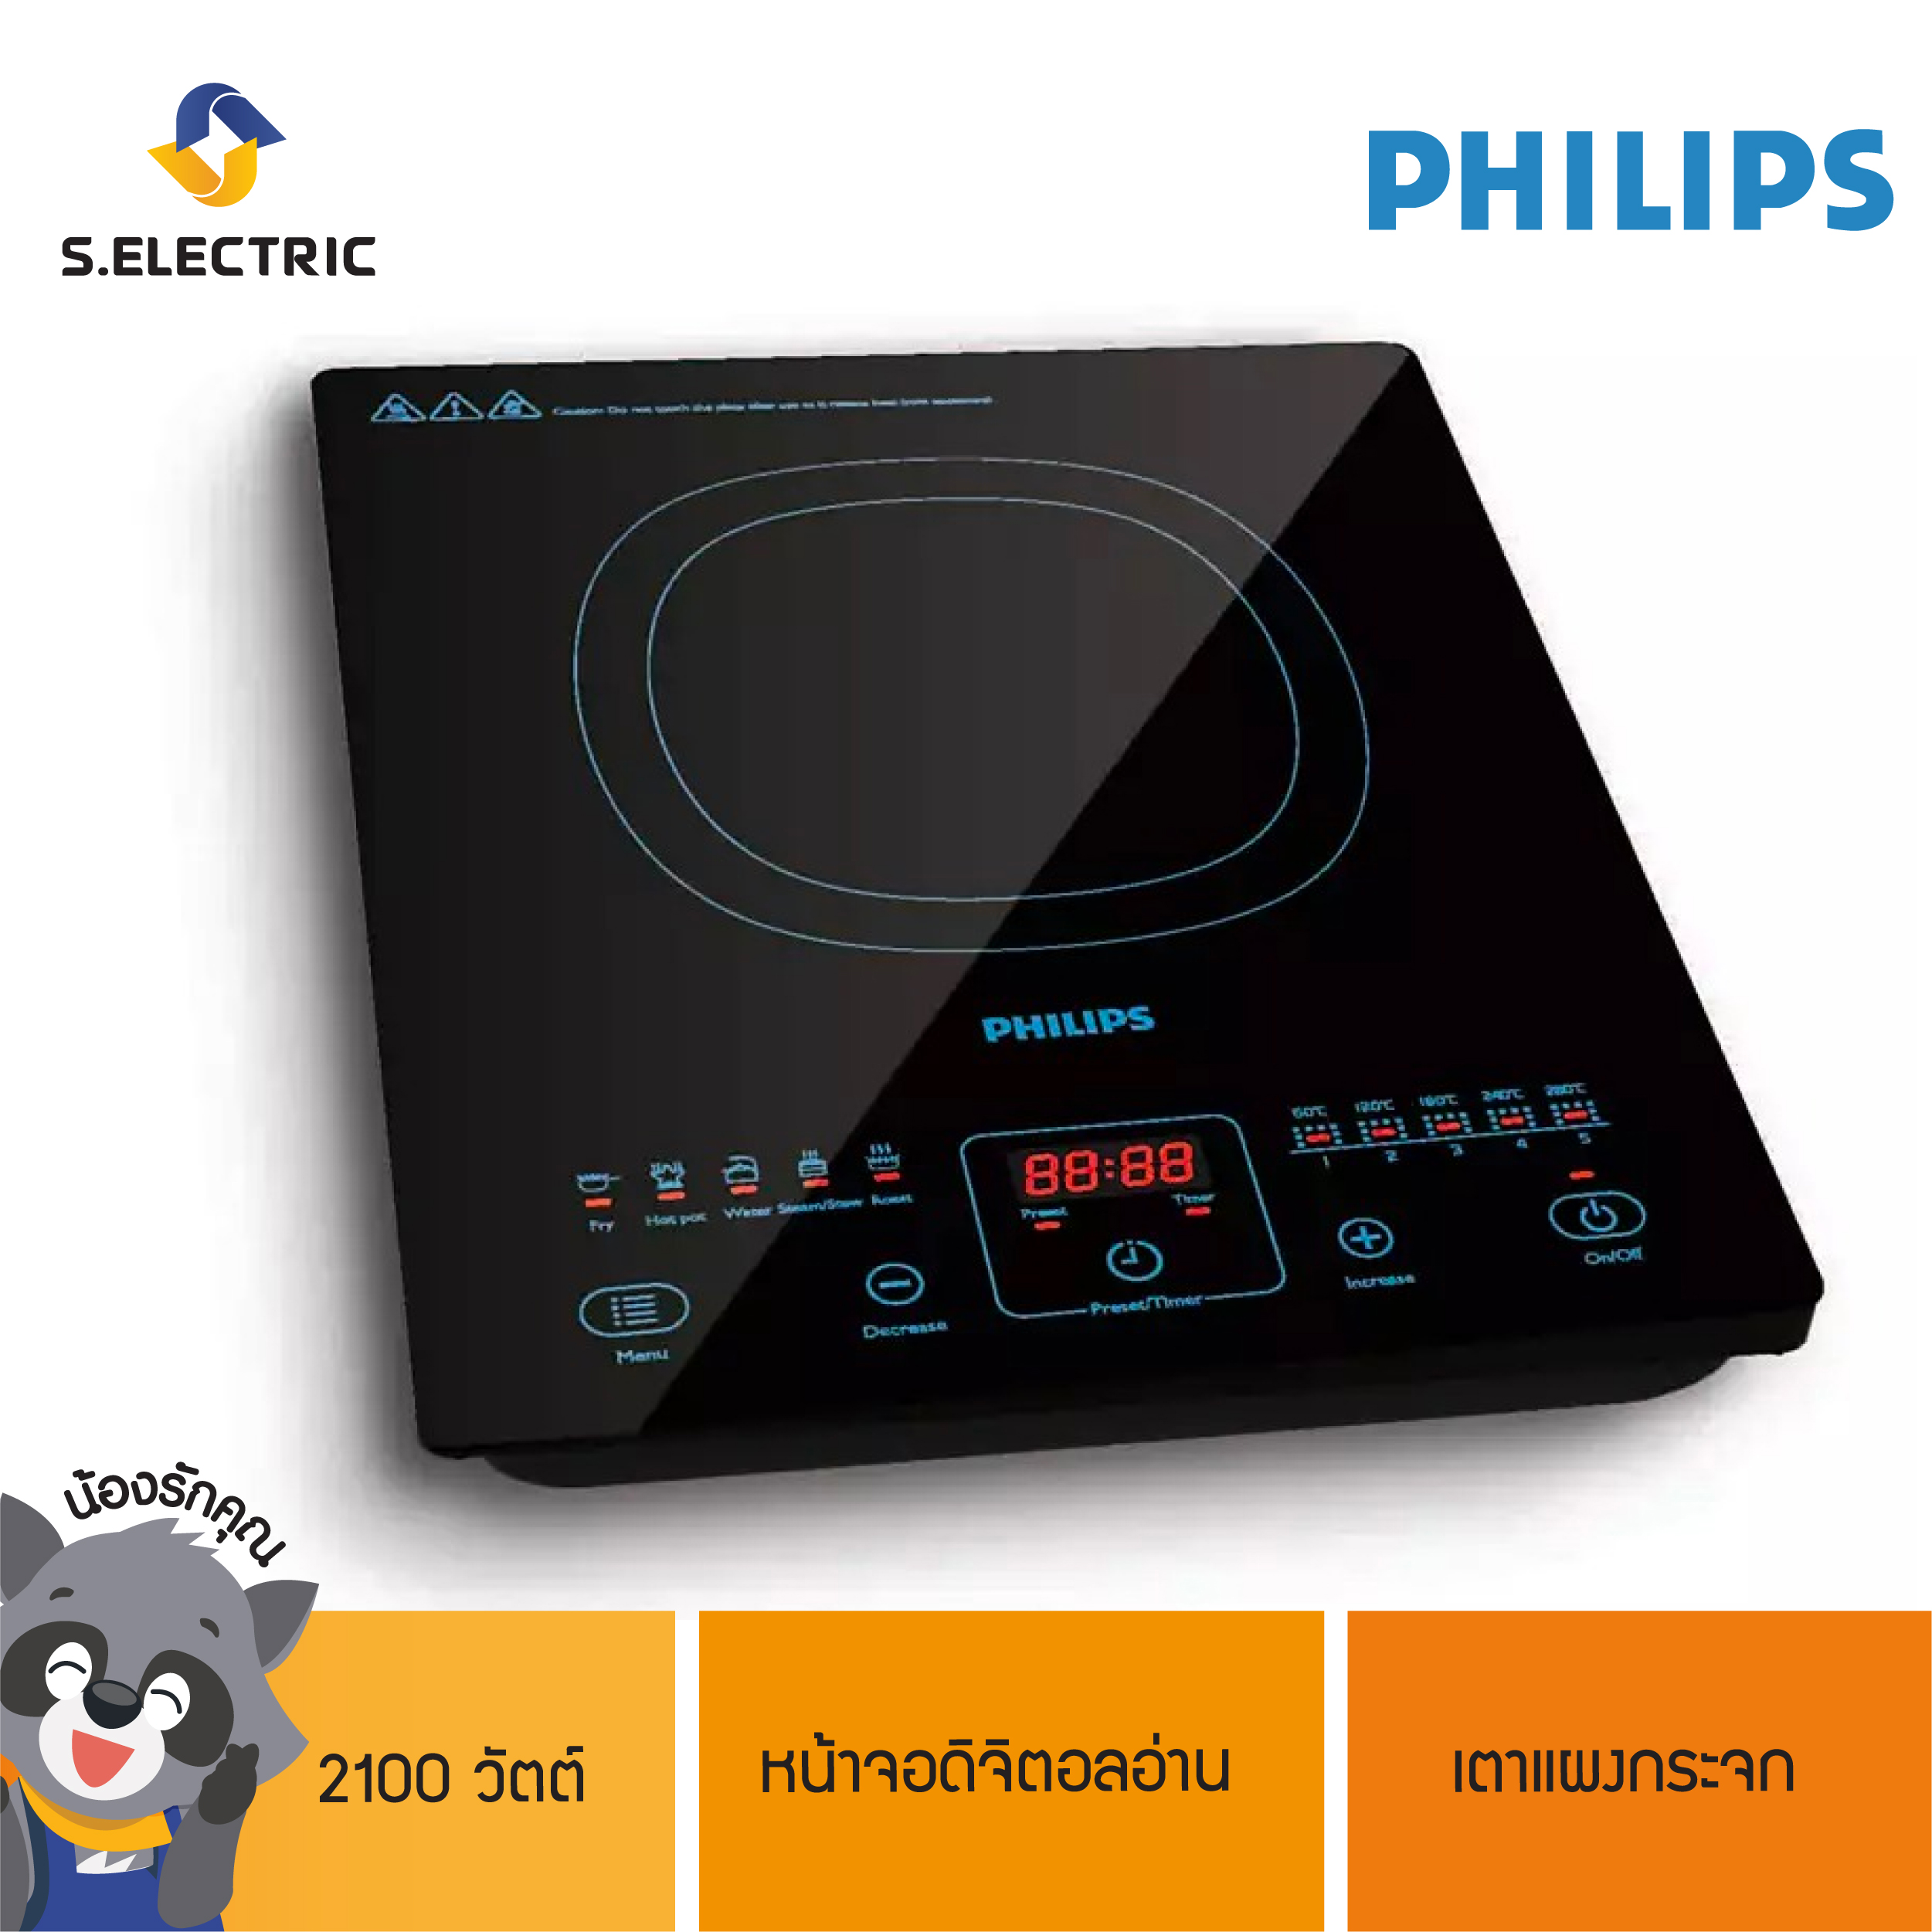 Philips เตาแม่เหล็กไฟฟ้า รุ่น HD4911 กำลังไฟ 2100 วัตต์ หน้าจอดิจิตอลอ่าน เตาแผงกระจก รับประกัน 2 ปี